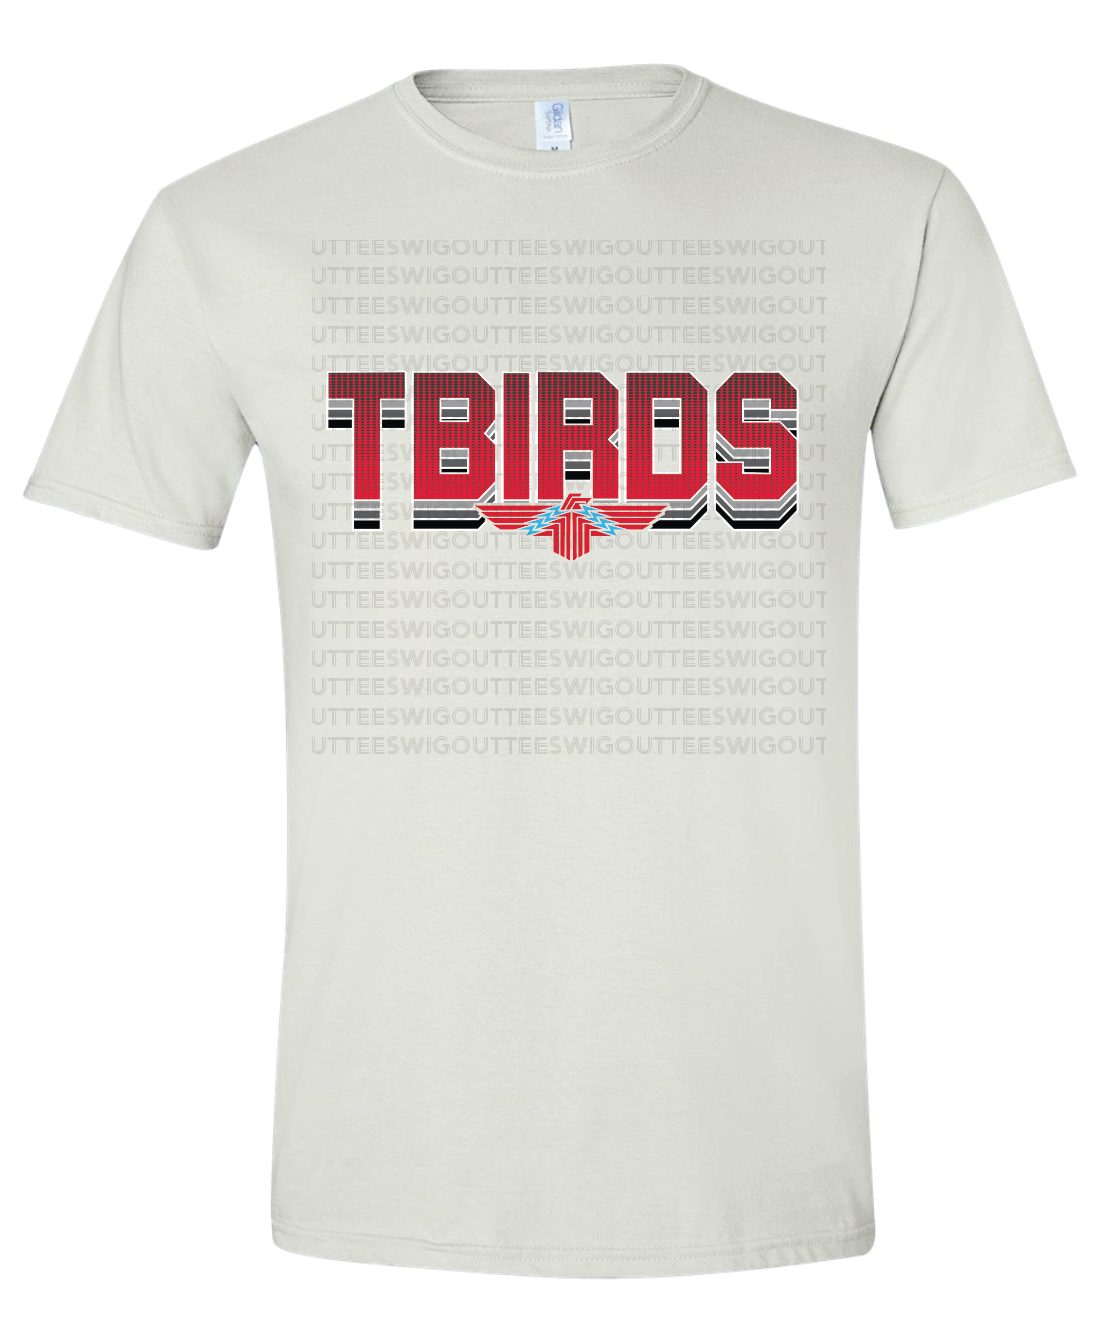 Stacked Tbirds Gildan Softstyle T-Shirt